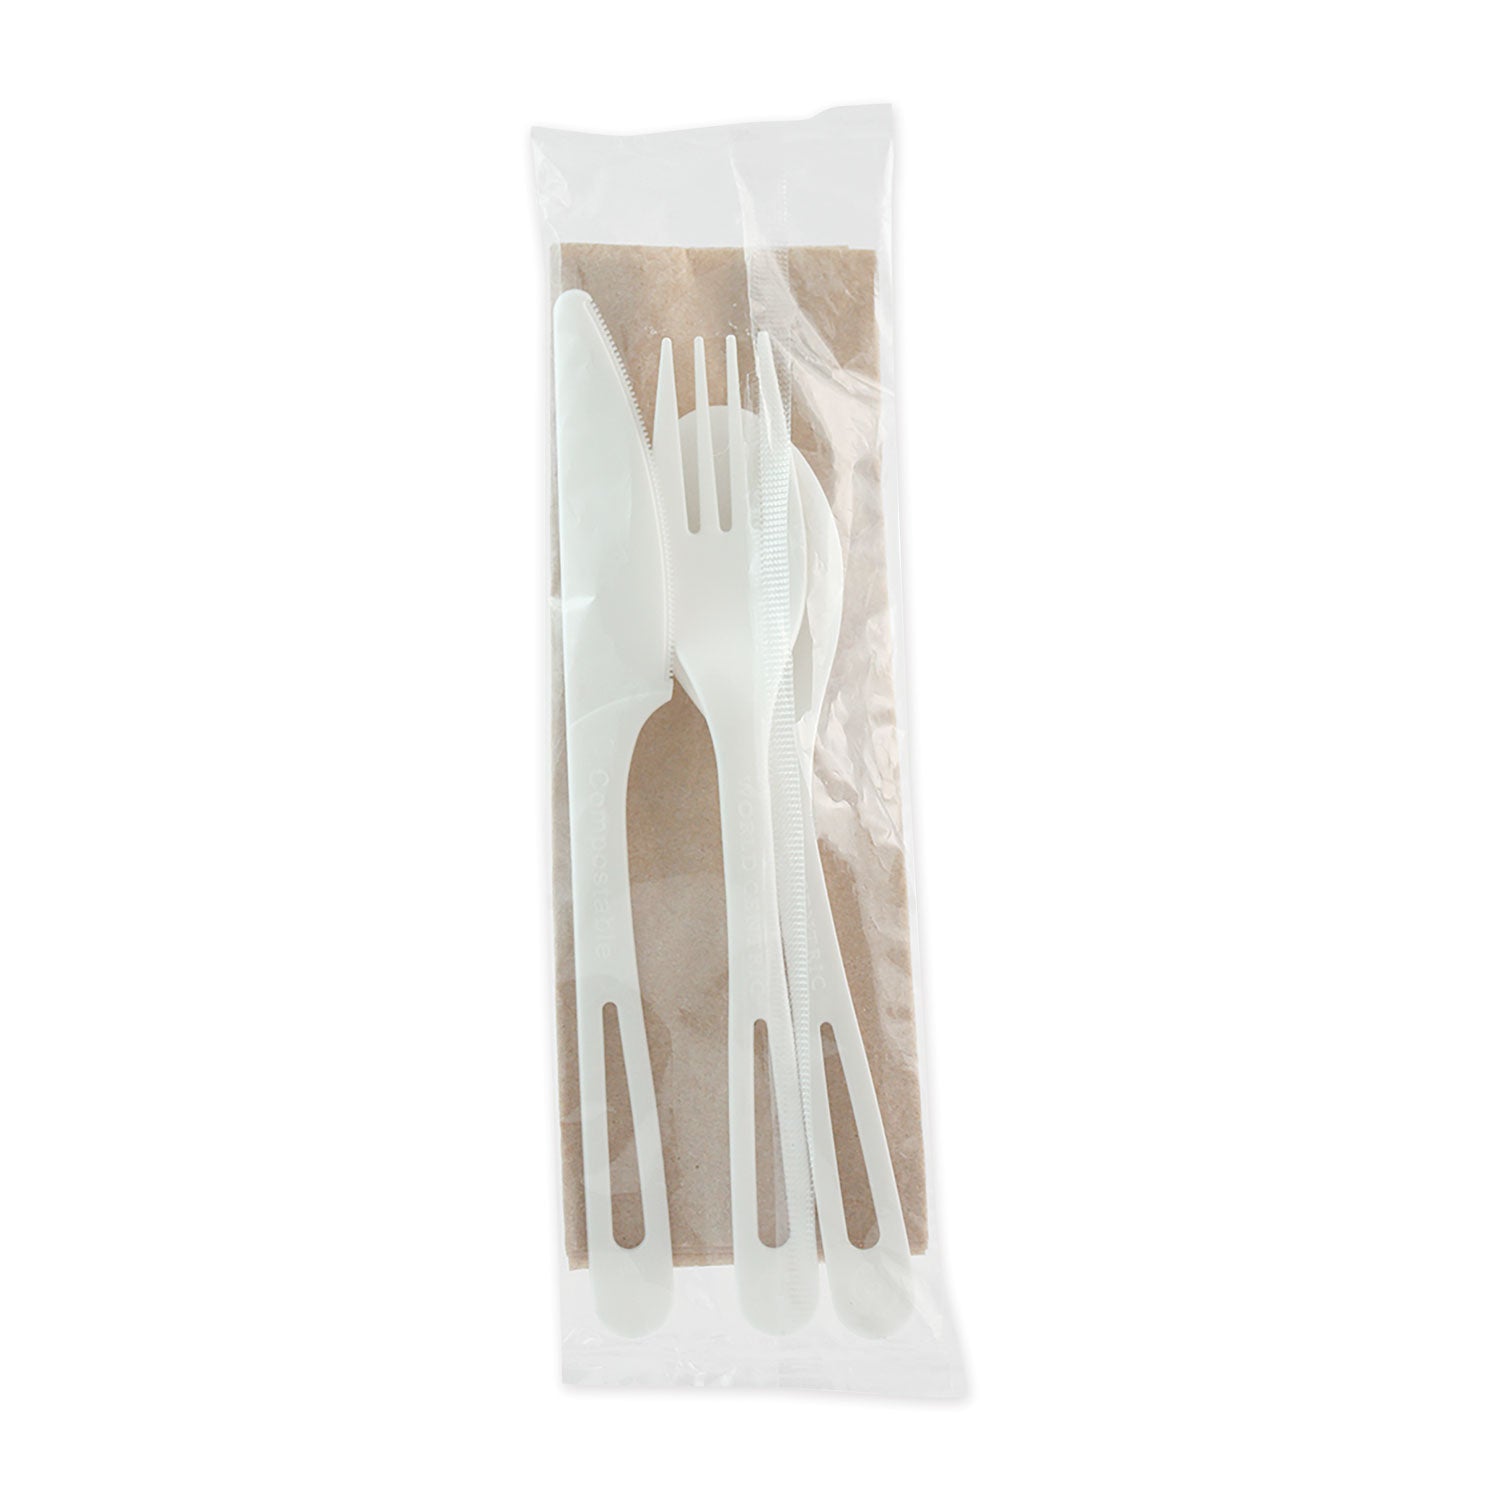 tpla-compostable-cutlery-knife-fork-spoon-napkin-6-white-250-carton_woraspstn - 1